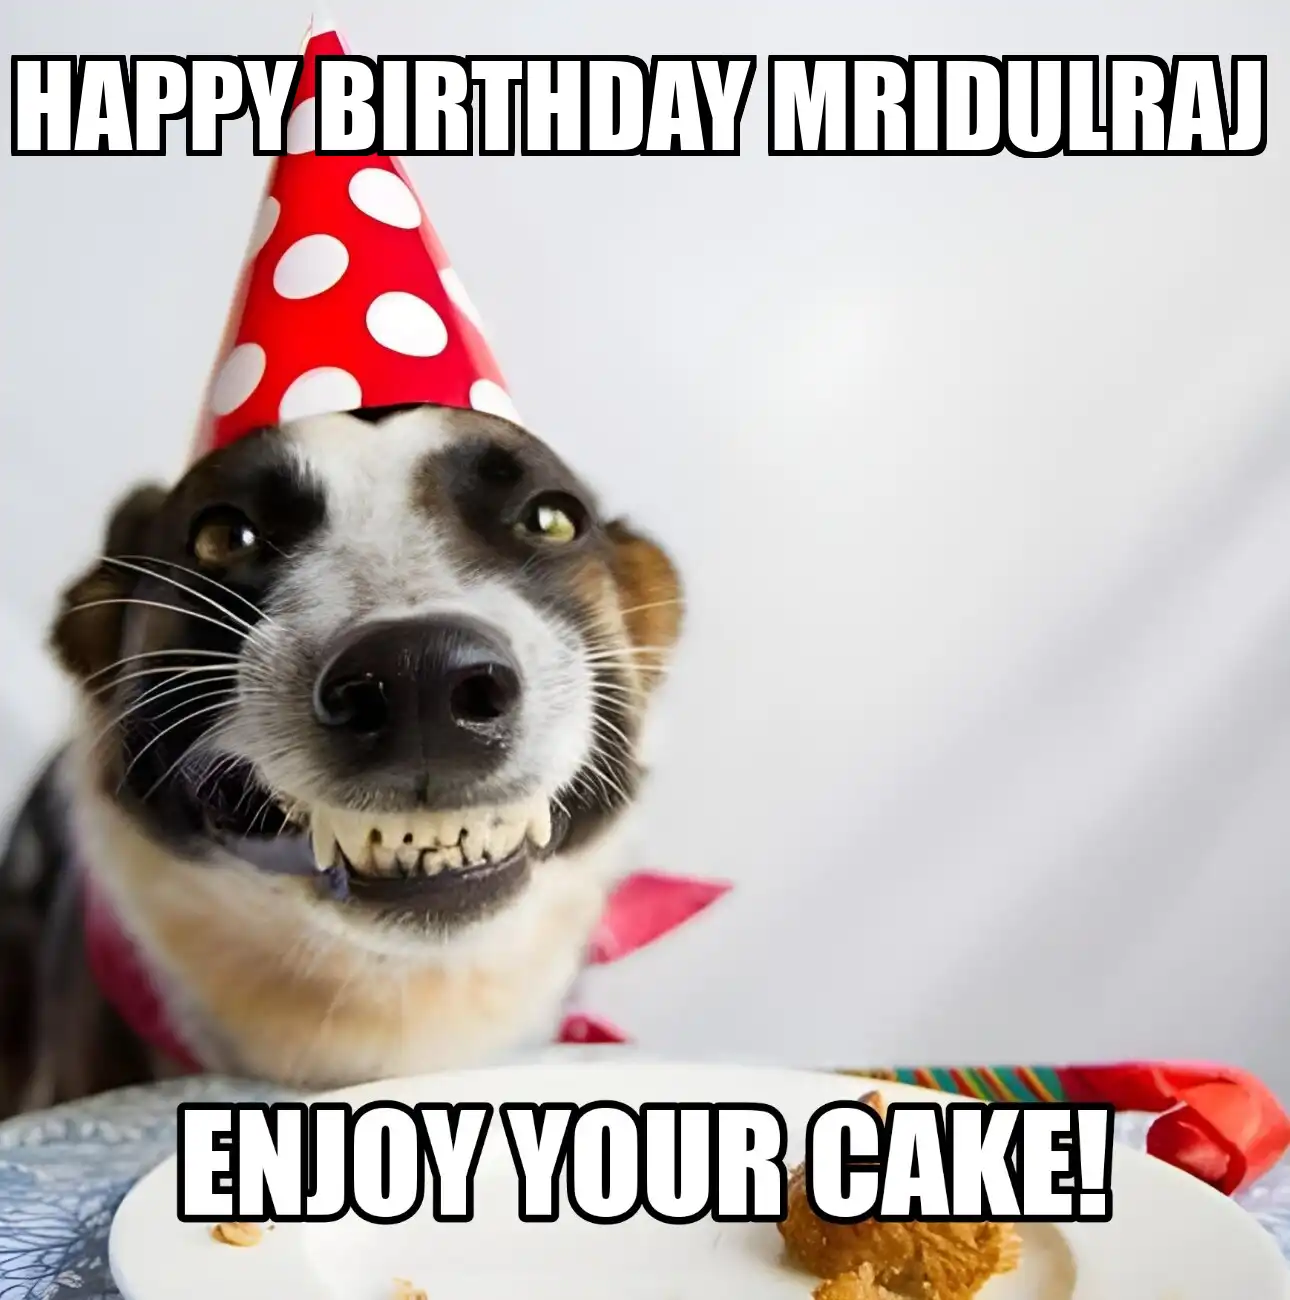 Happy Birthday Mridulraj Enjoy Your Cake Dog Meme